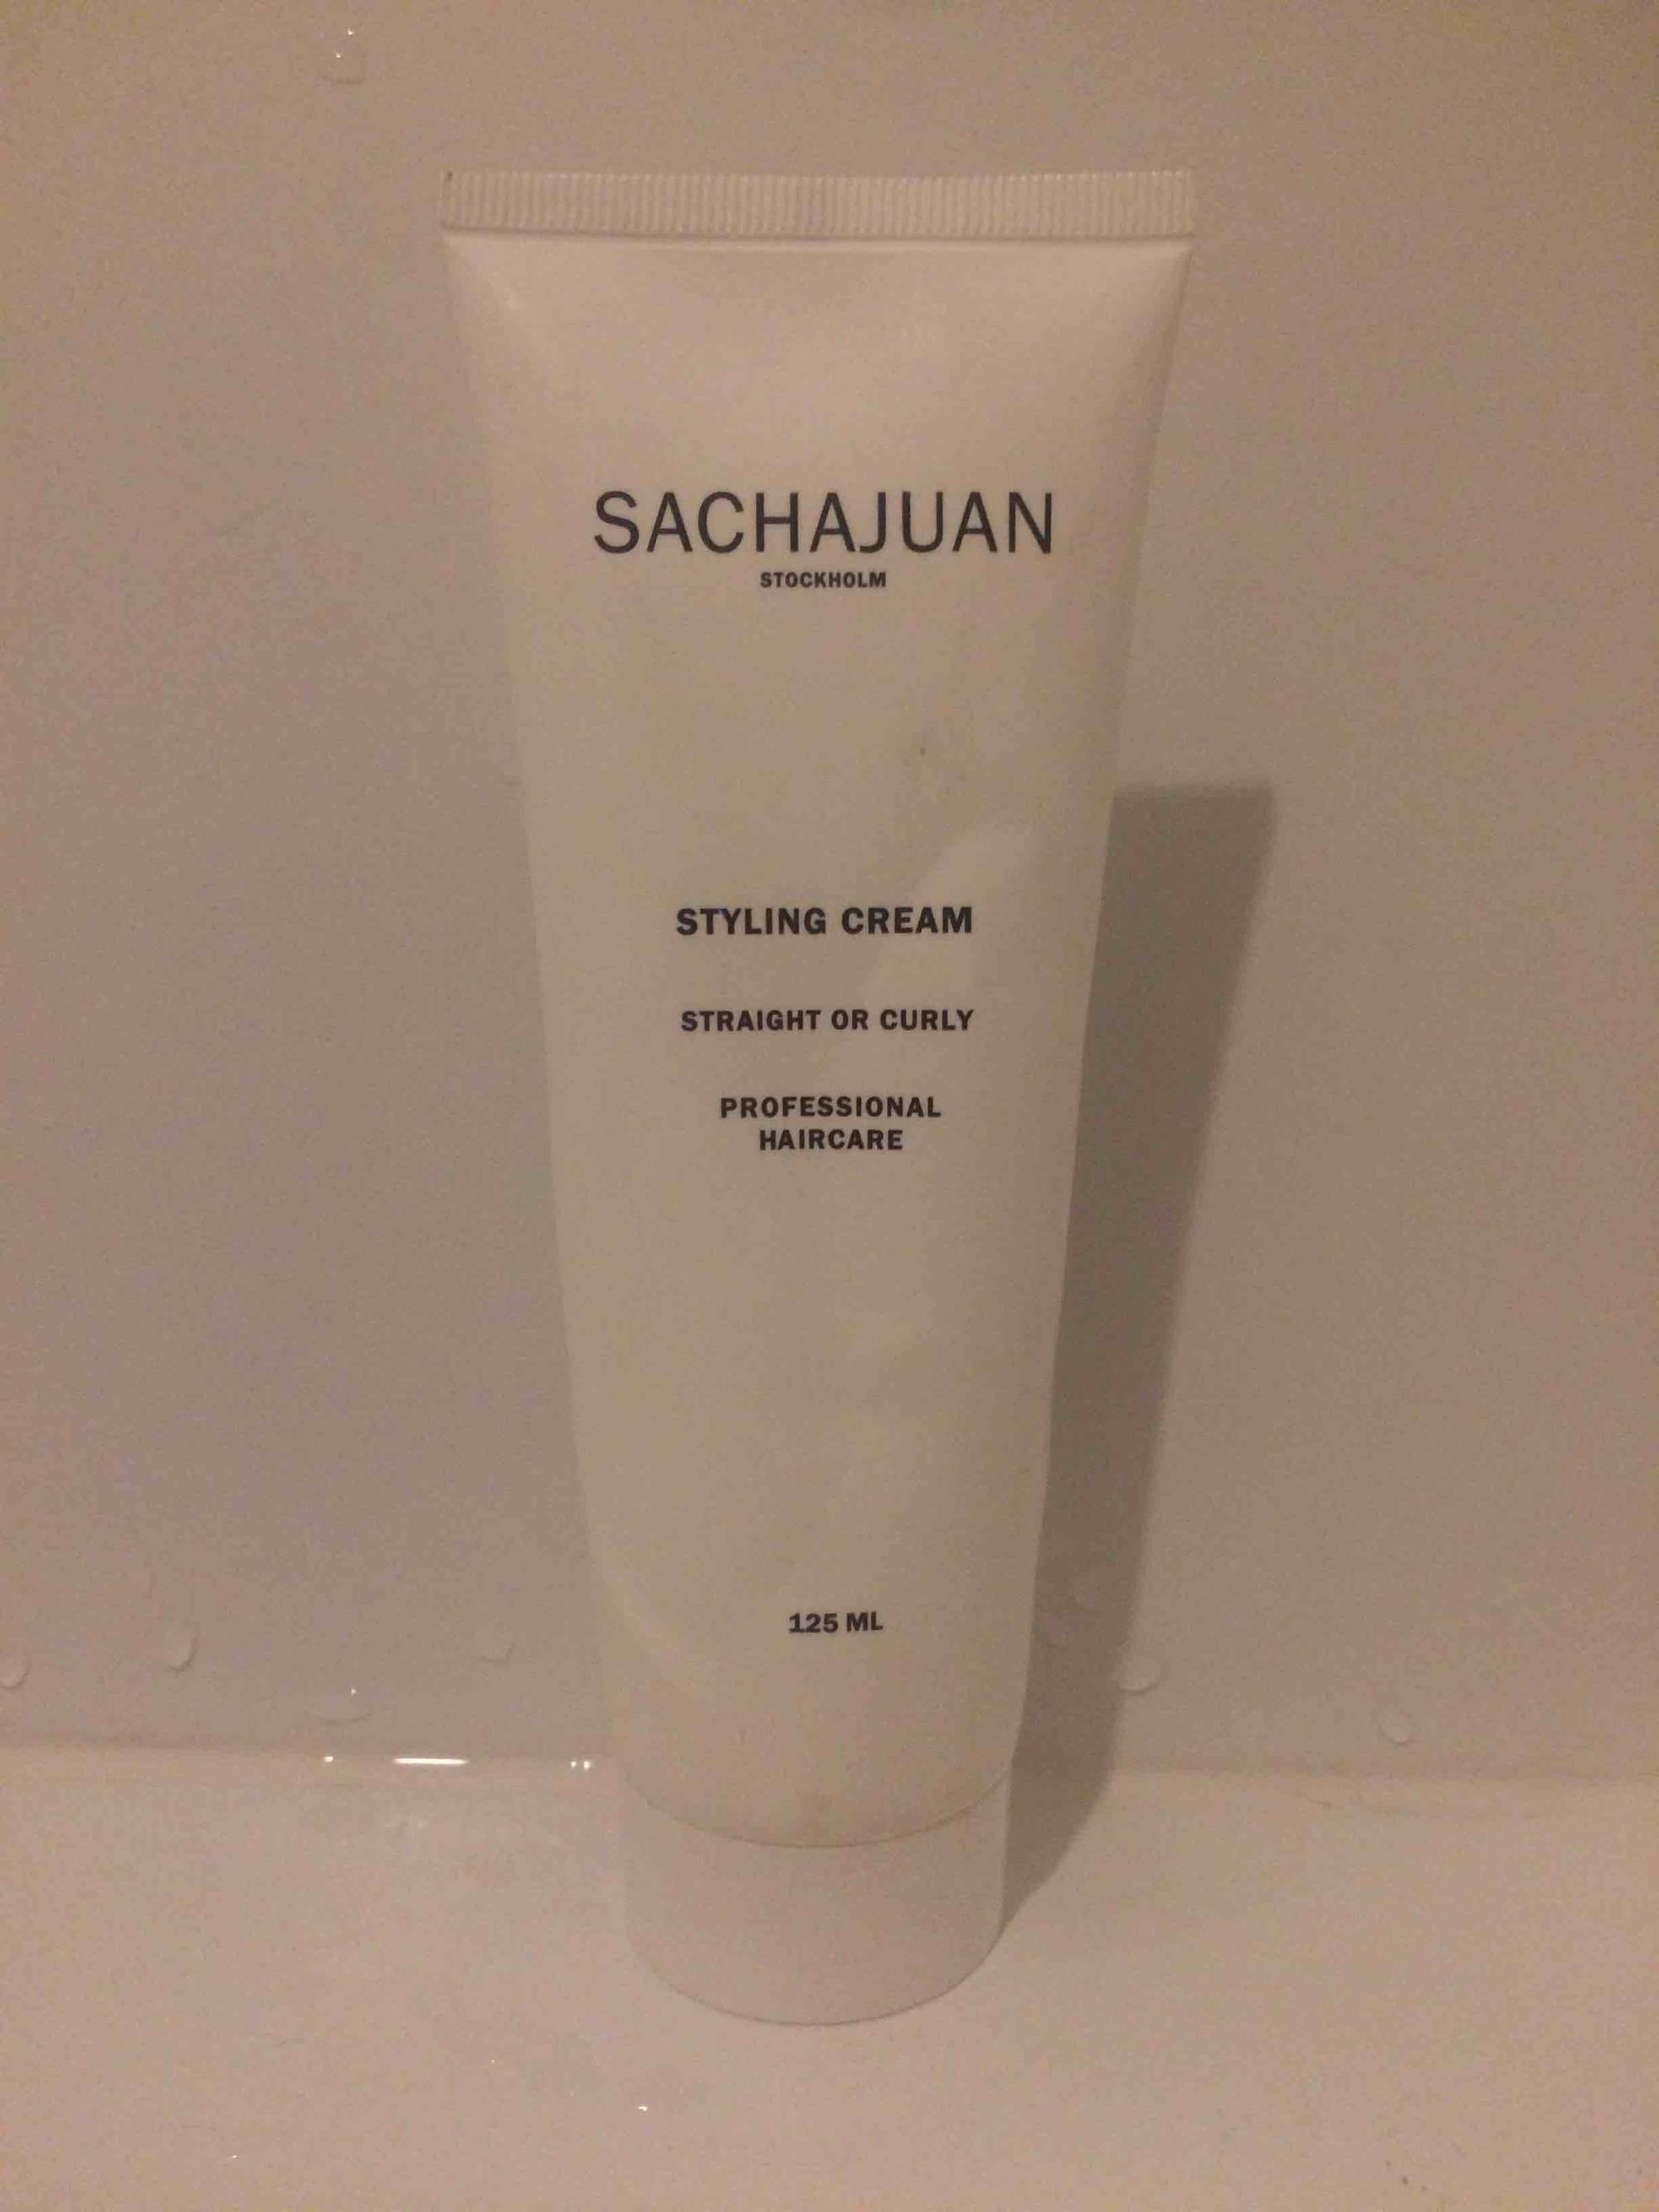 SACHAJUAN - Styling cream - Straight or curly